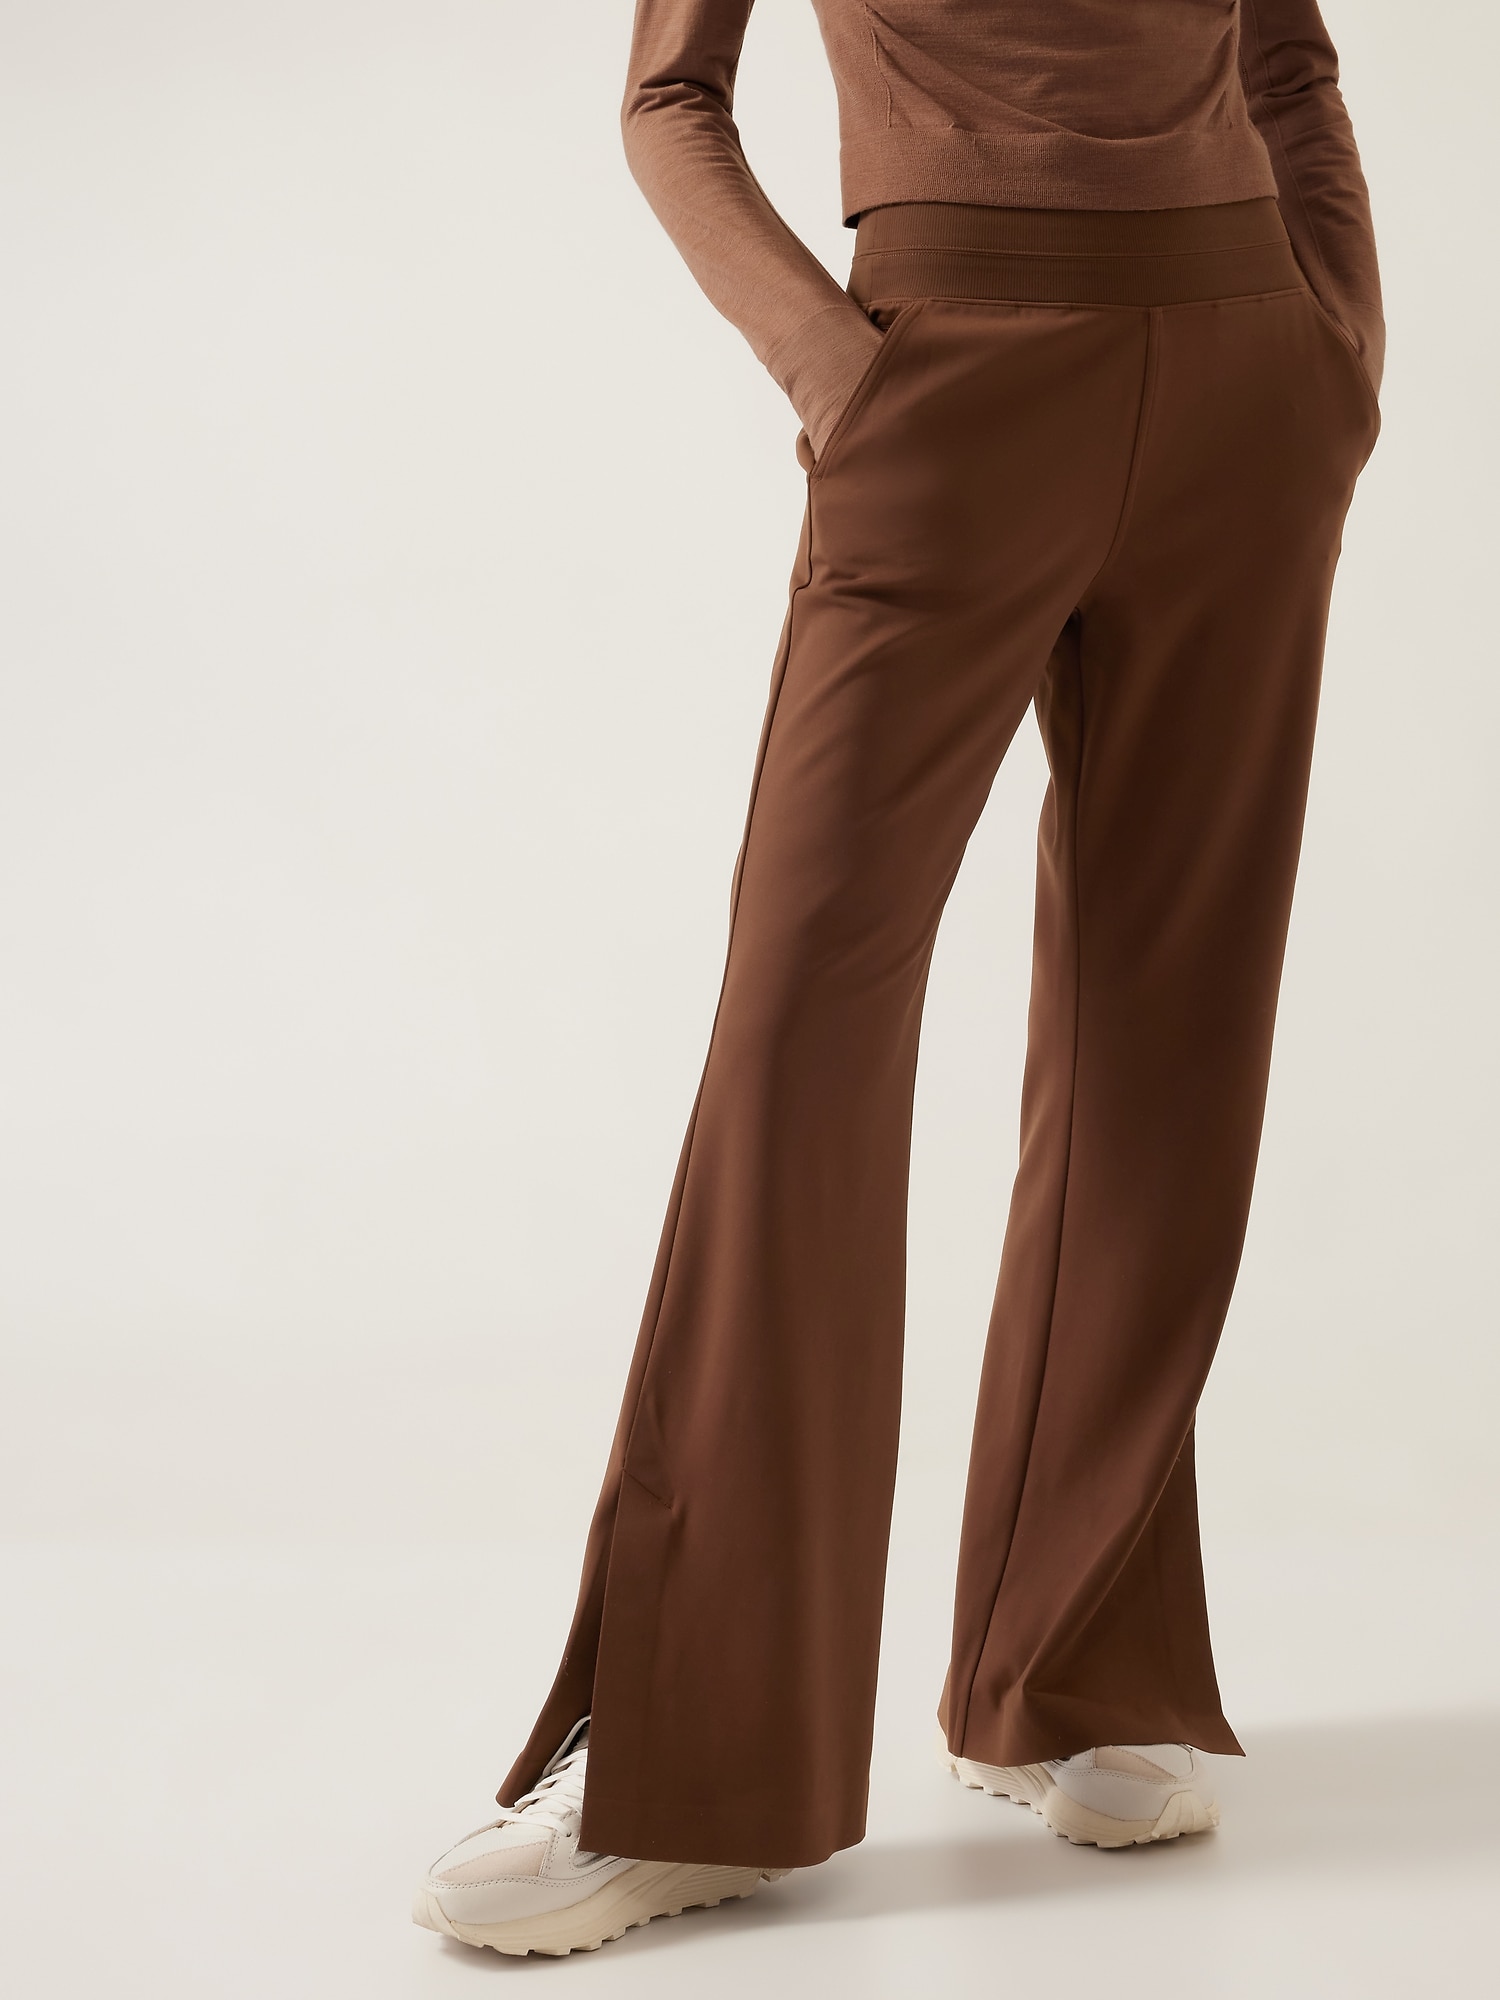 Matte Satin Fit & Flare Dress Pants  Womens wide leg pants, Fit & flare,  Flattering fashion